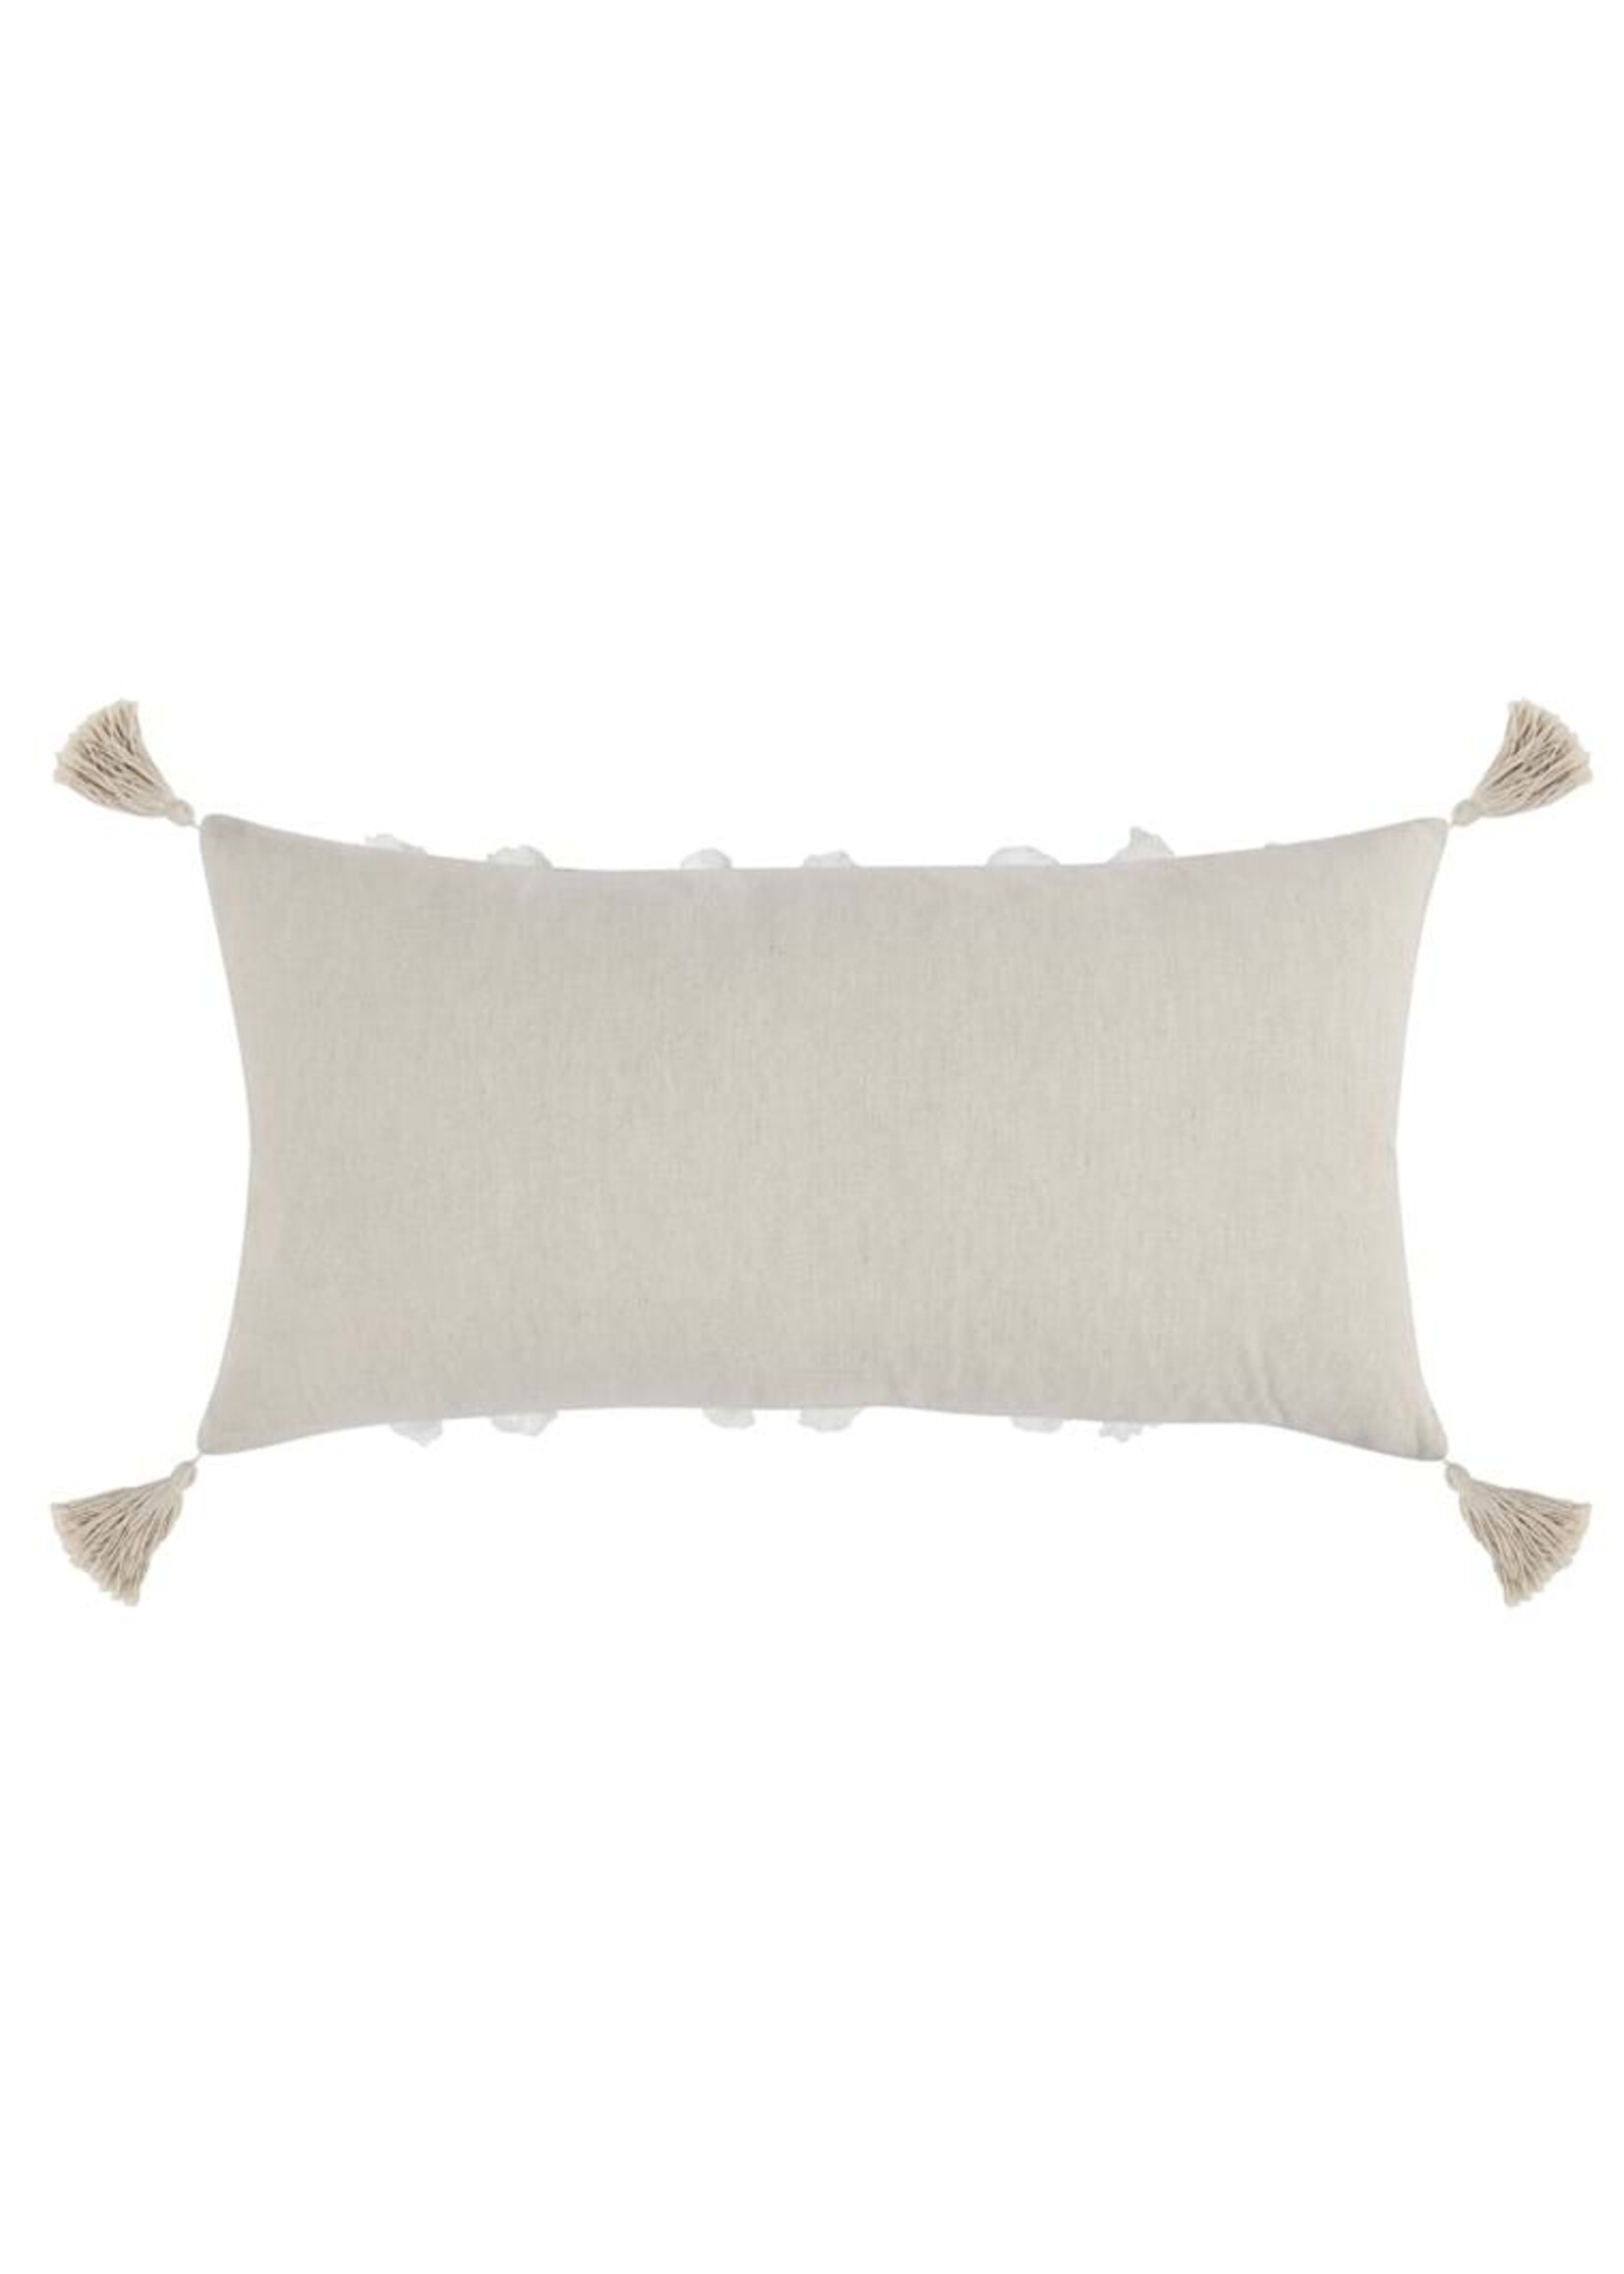 AD Saint Pillow-Natural/Ivory